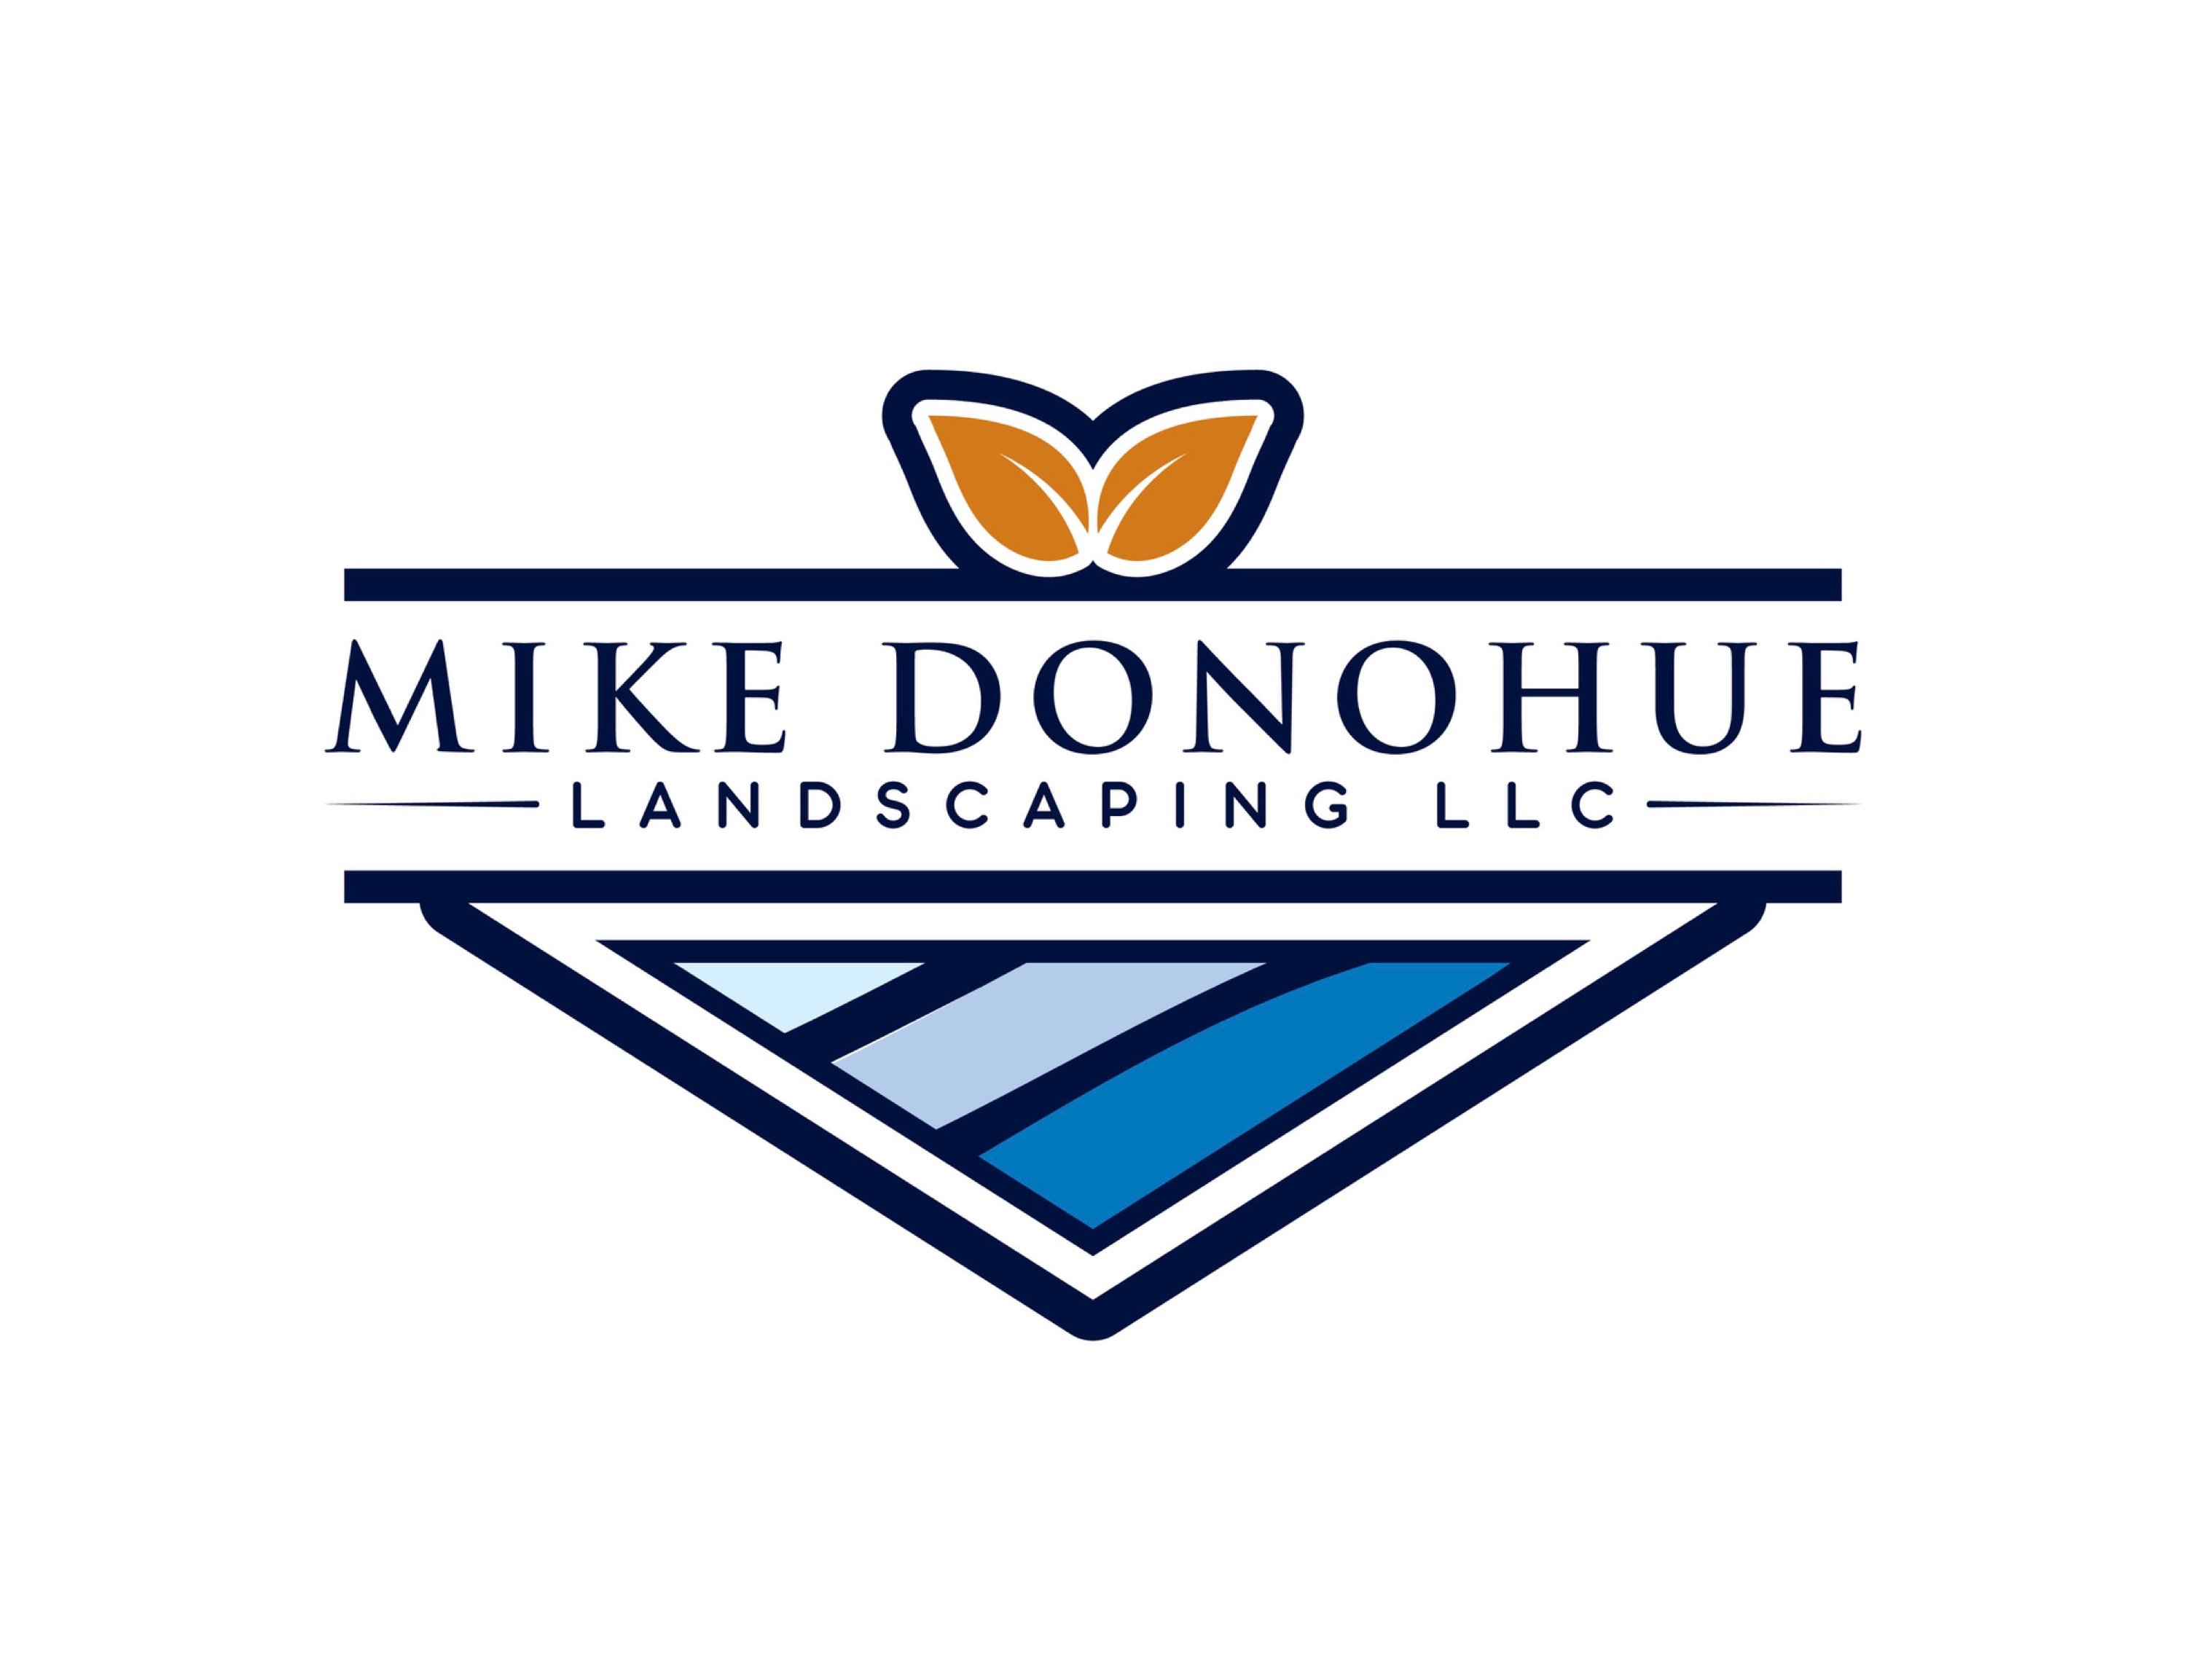 Mike Donohue Landscaping Logo